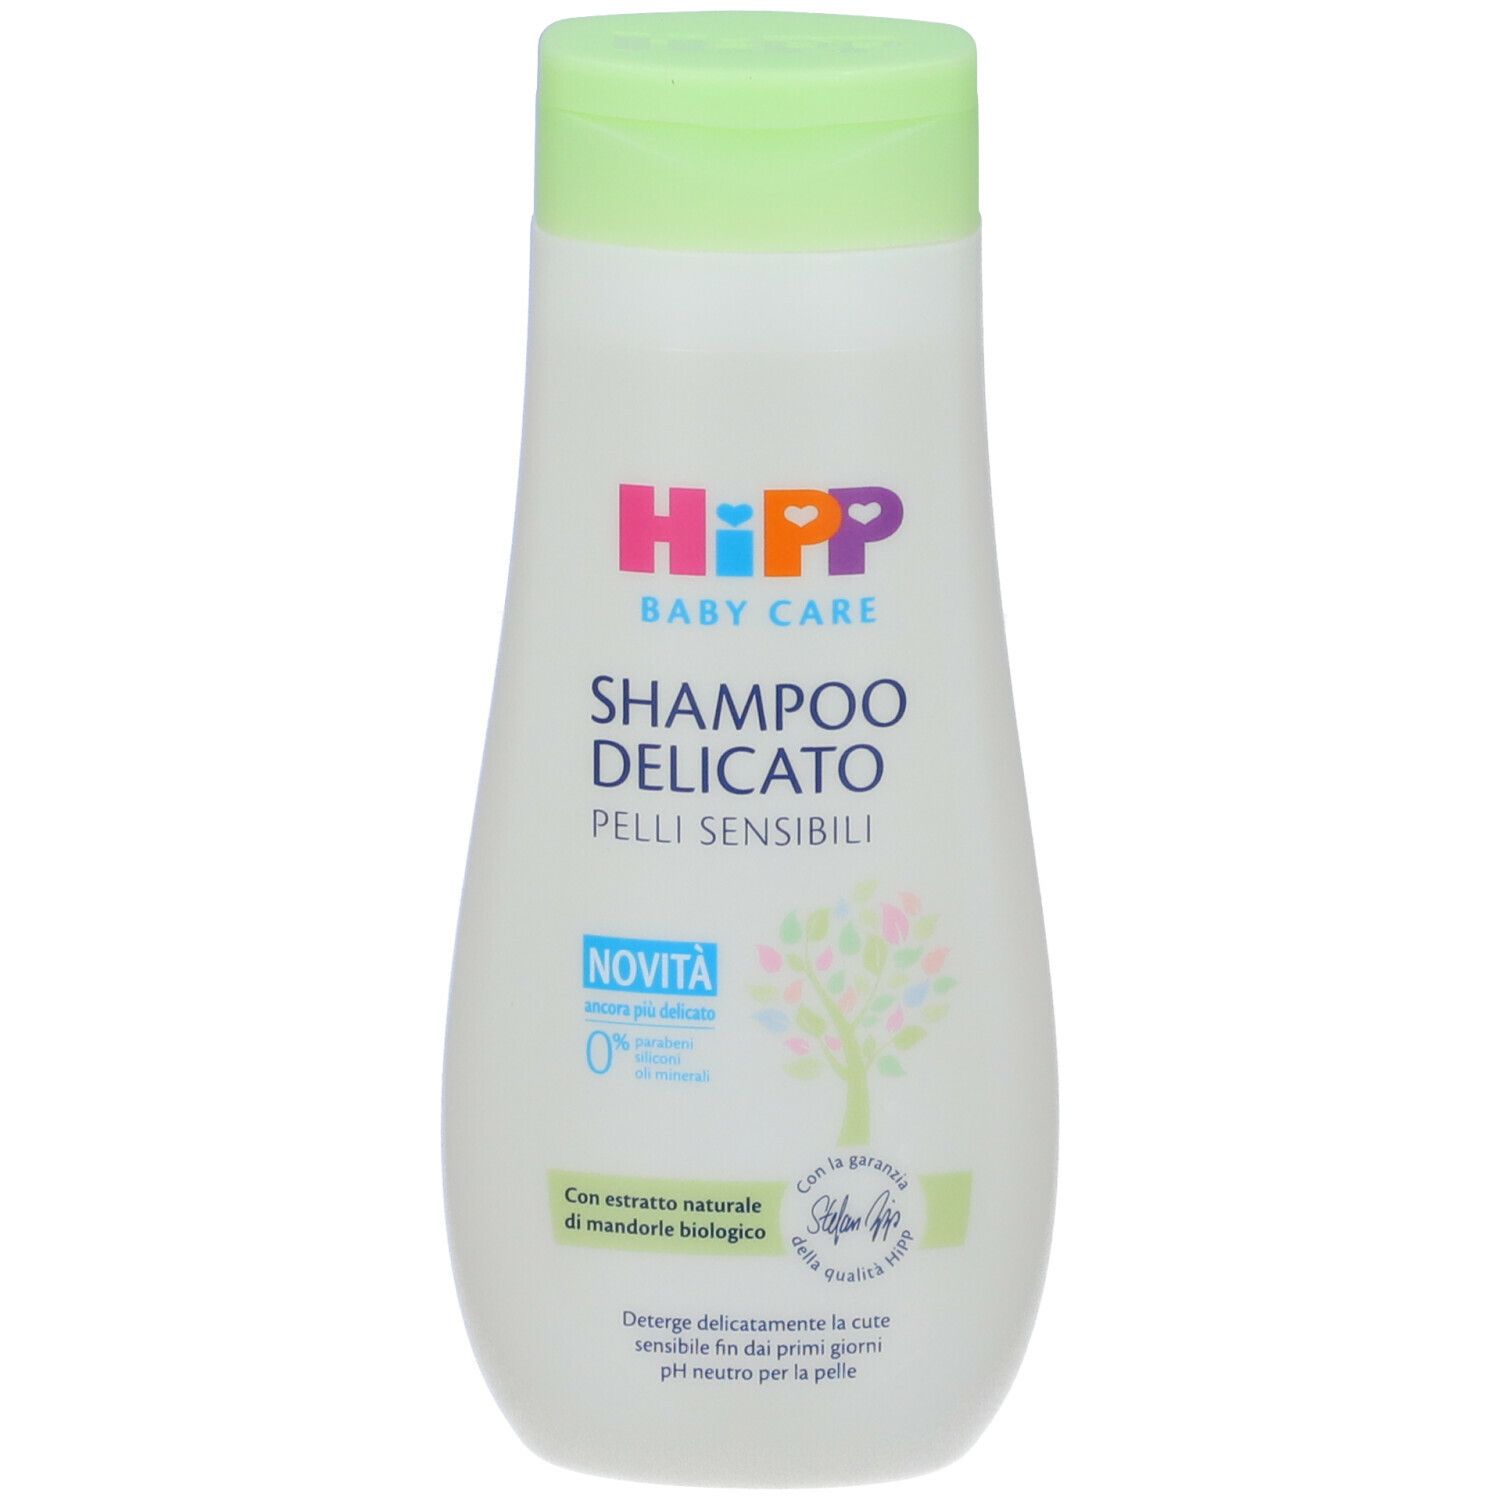 HiPP Shampoo Delicato